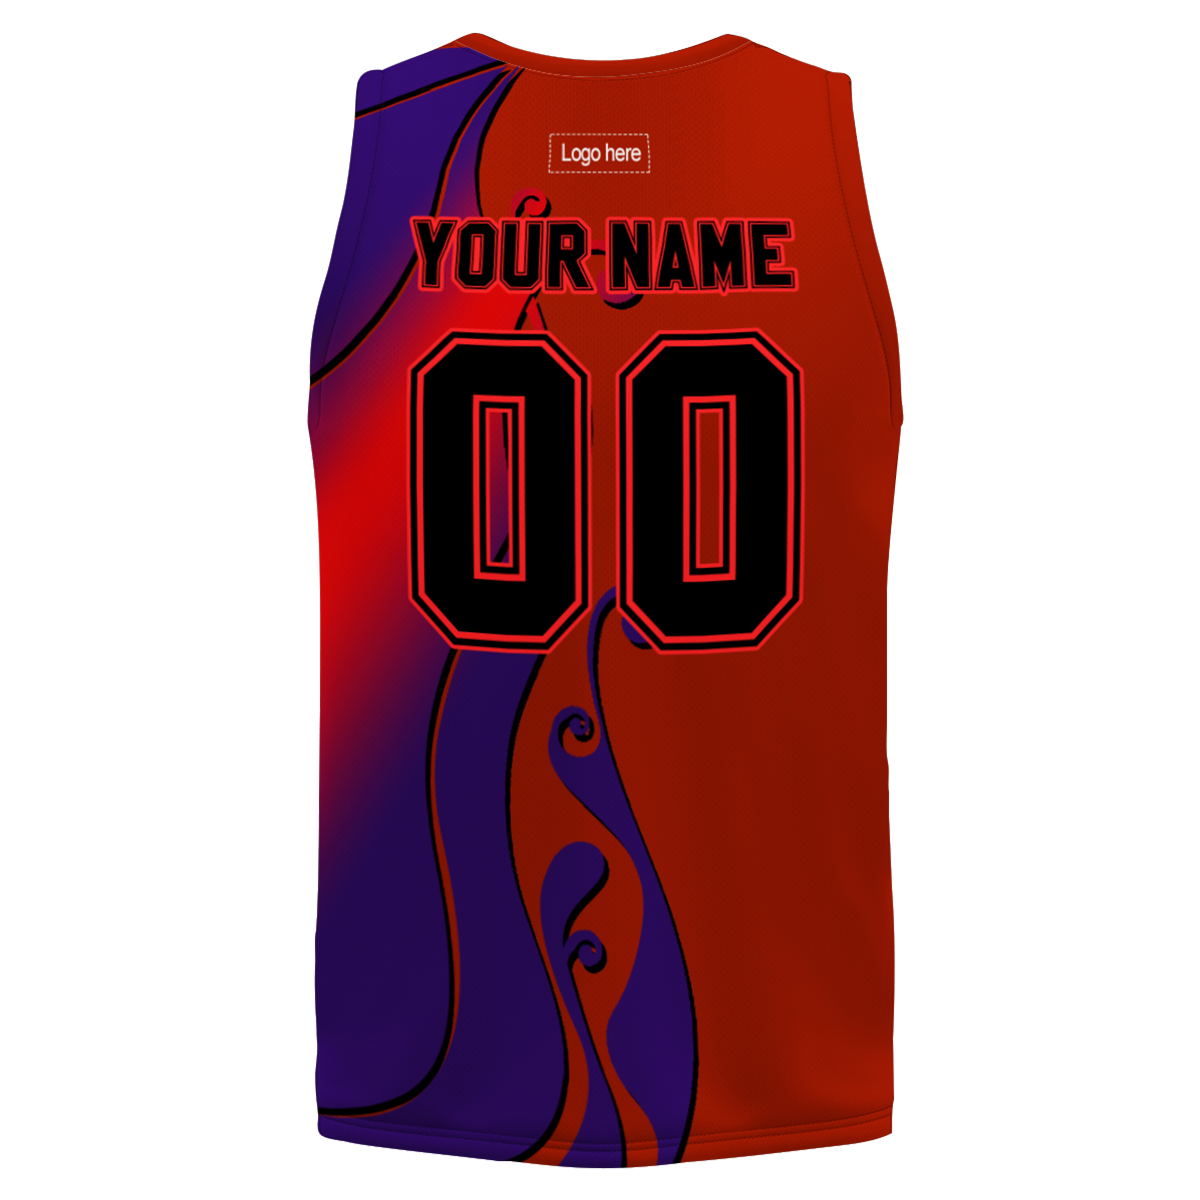 oem-custom-quick-dry-basketball-wear-personalized-design-sublimation-basketball-uniform-jerseys-at-cj-pod-6